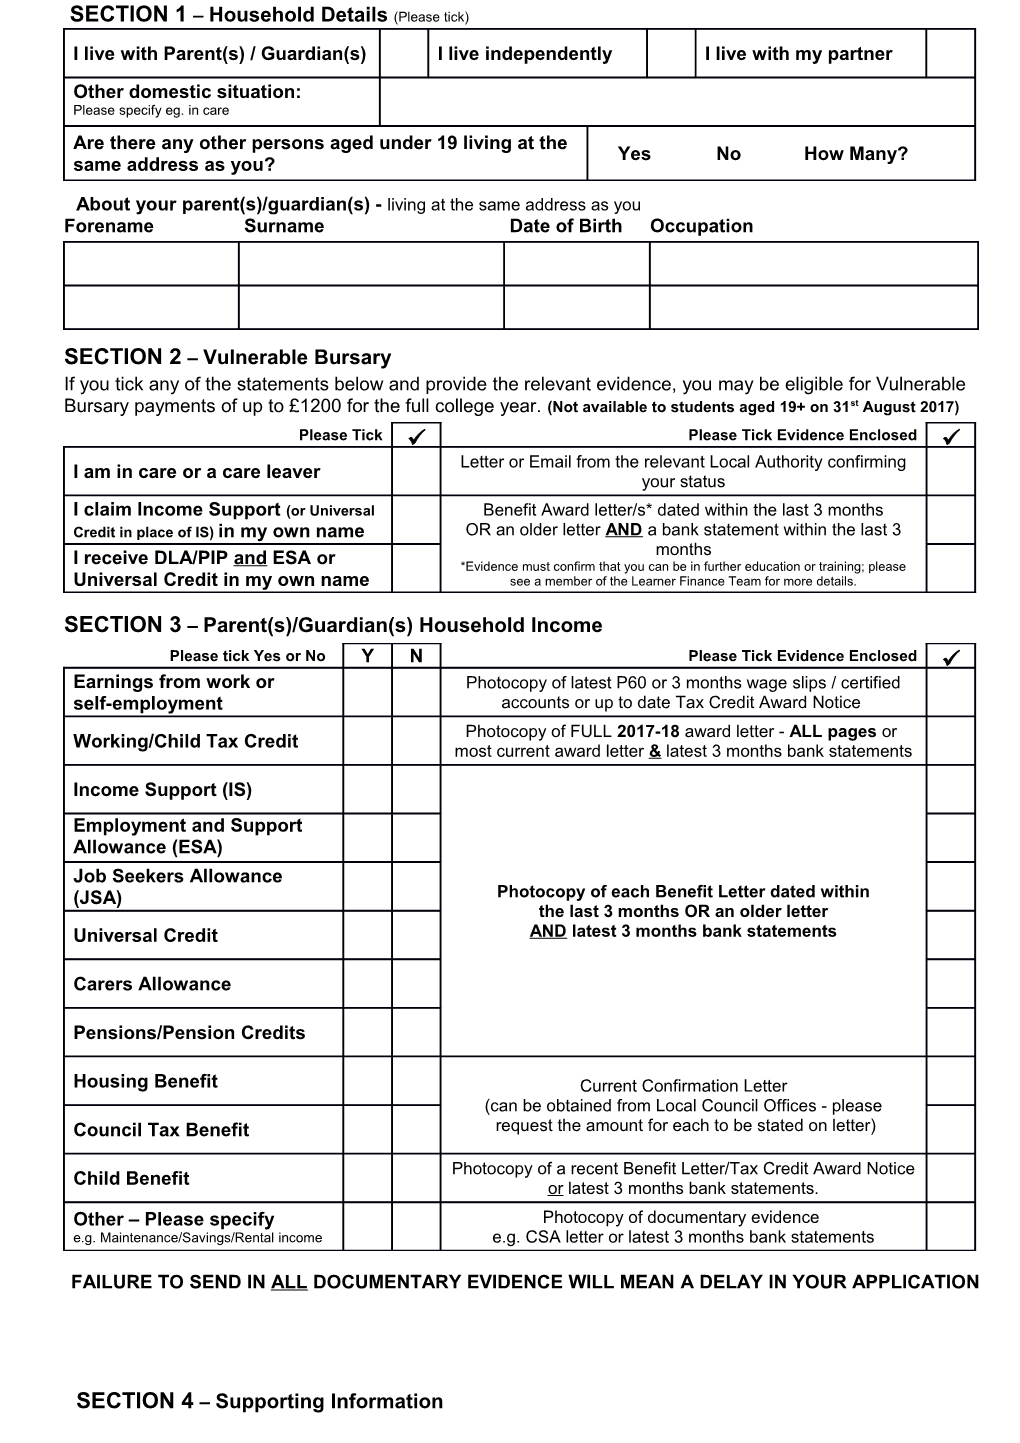 16-19 Bursary Fund Application Form